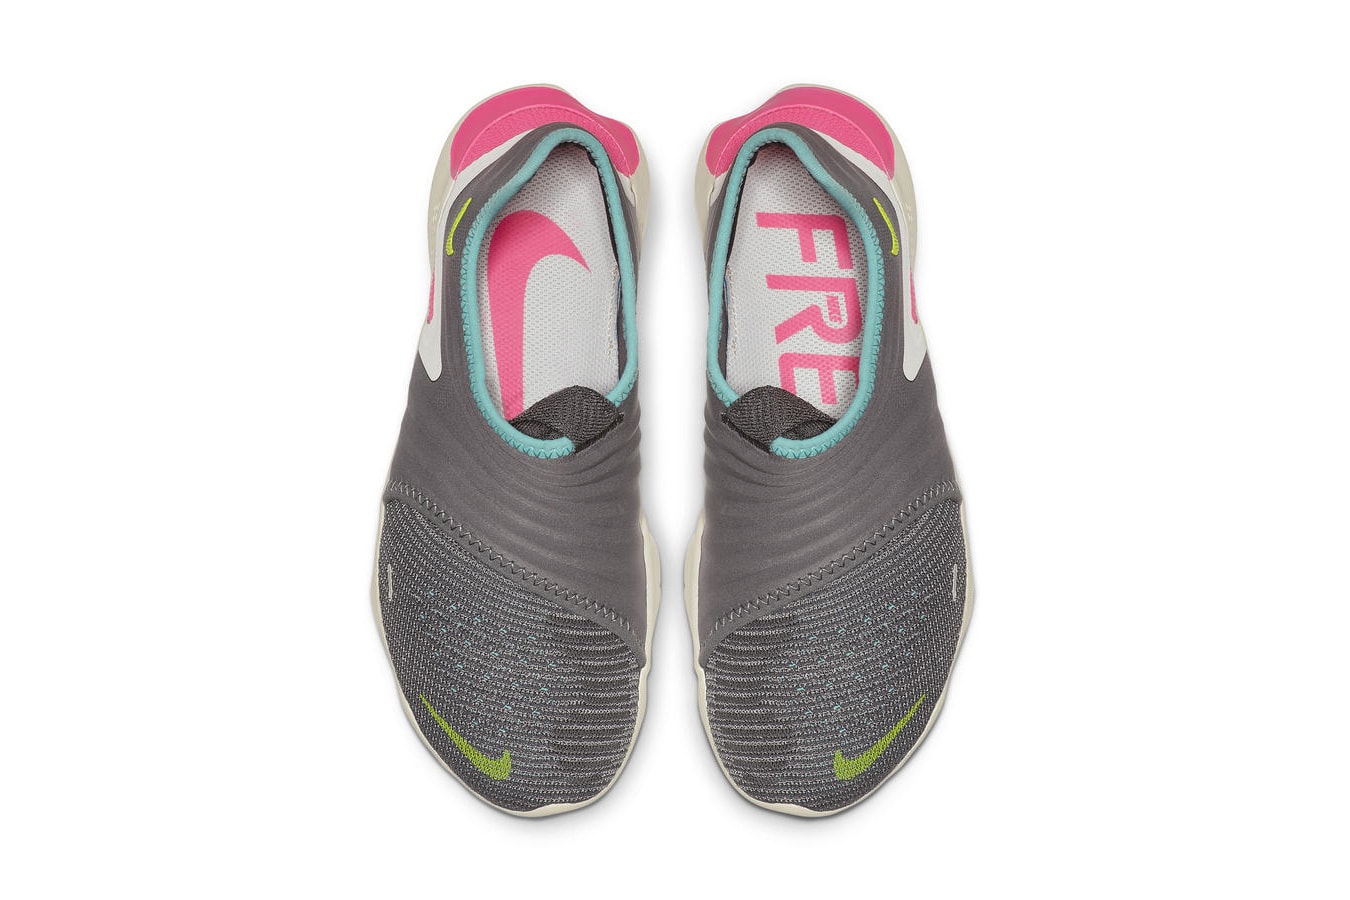 Nike 全新 2019 Free Running 跑鞋系列登場